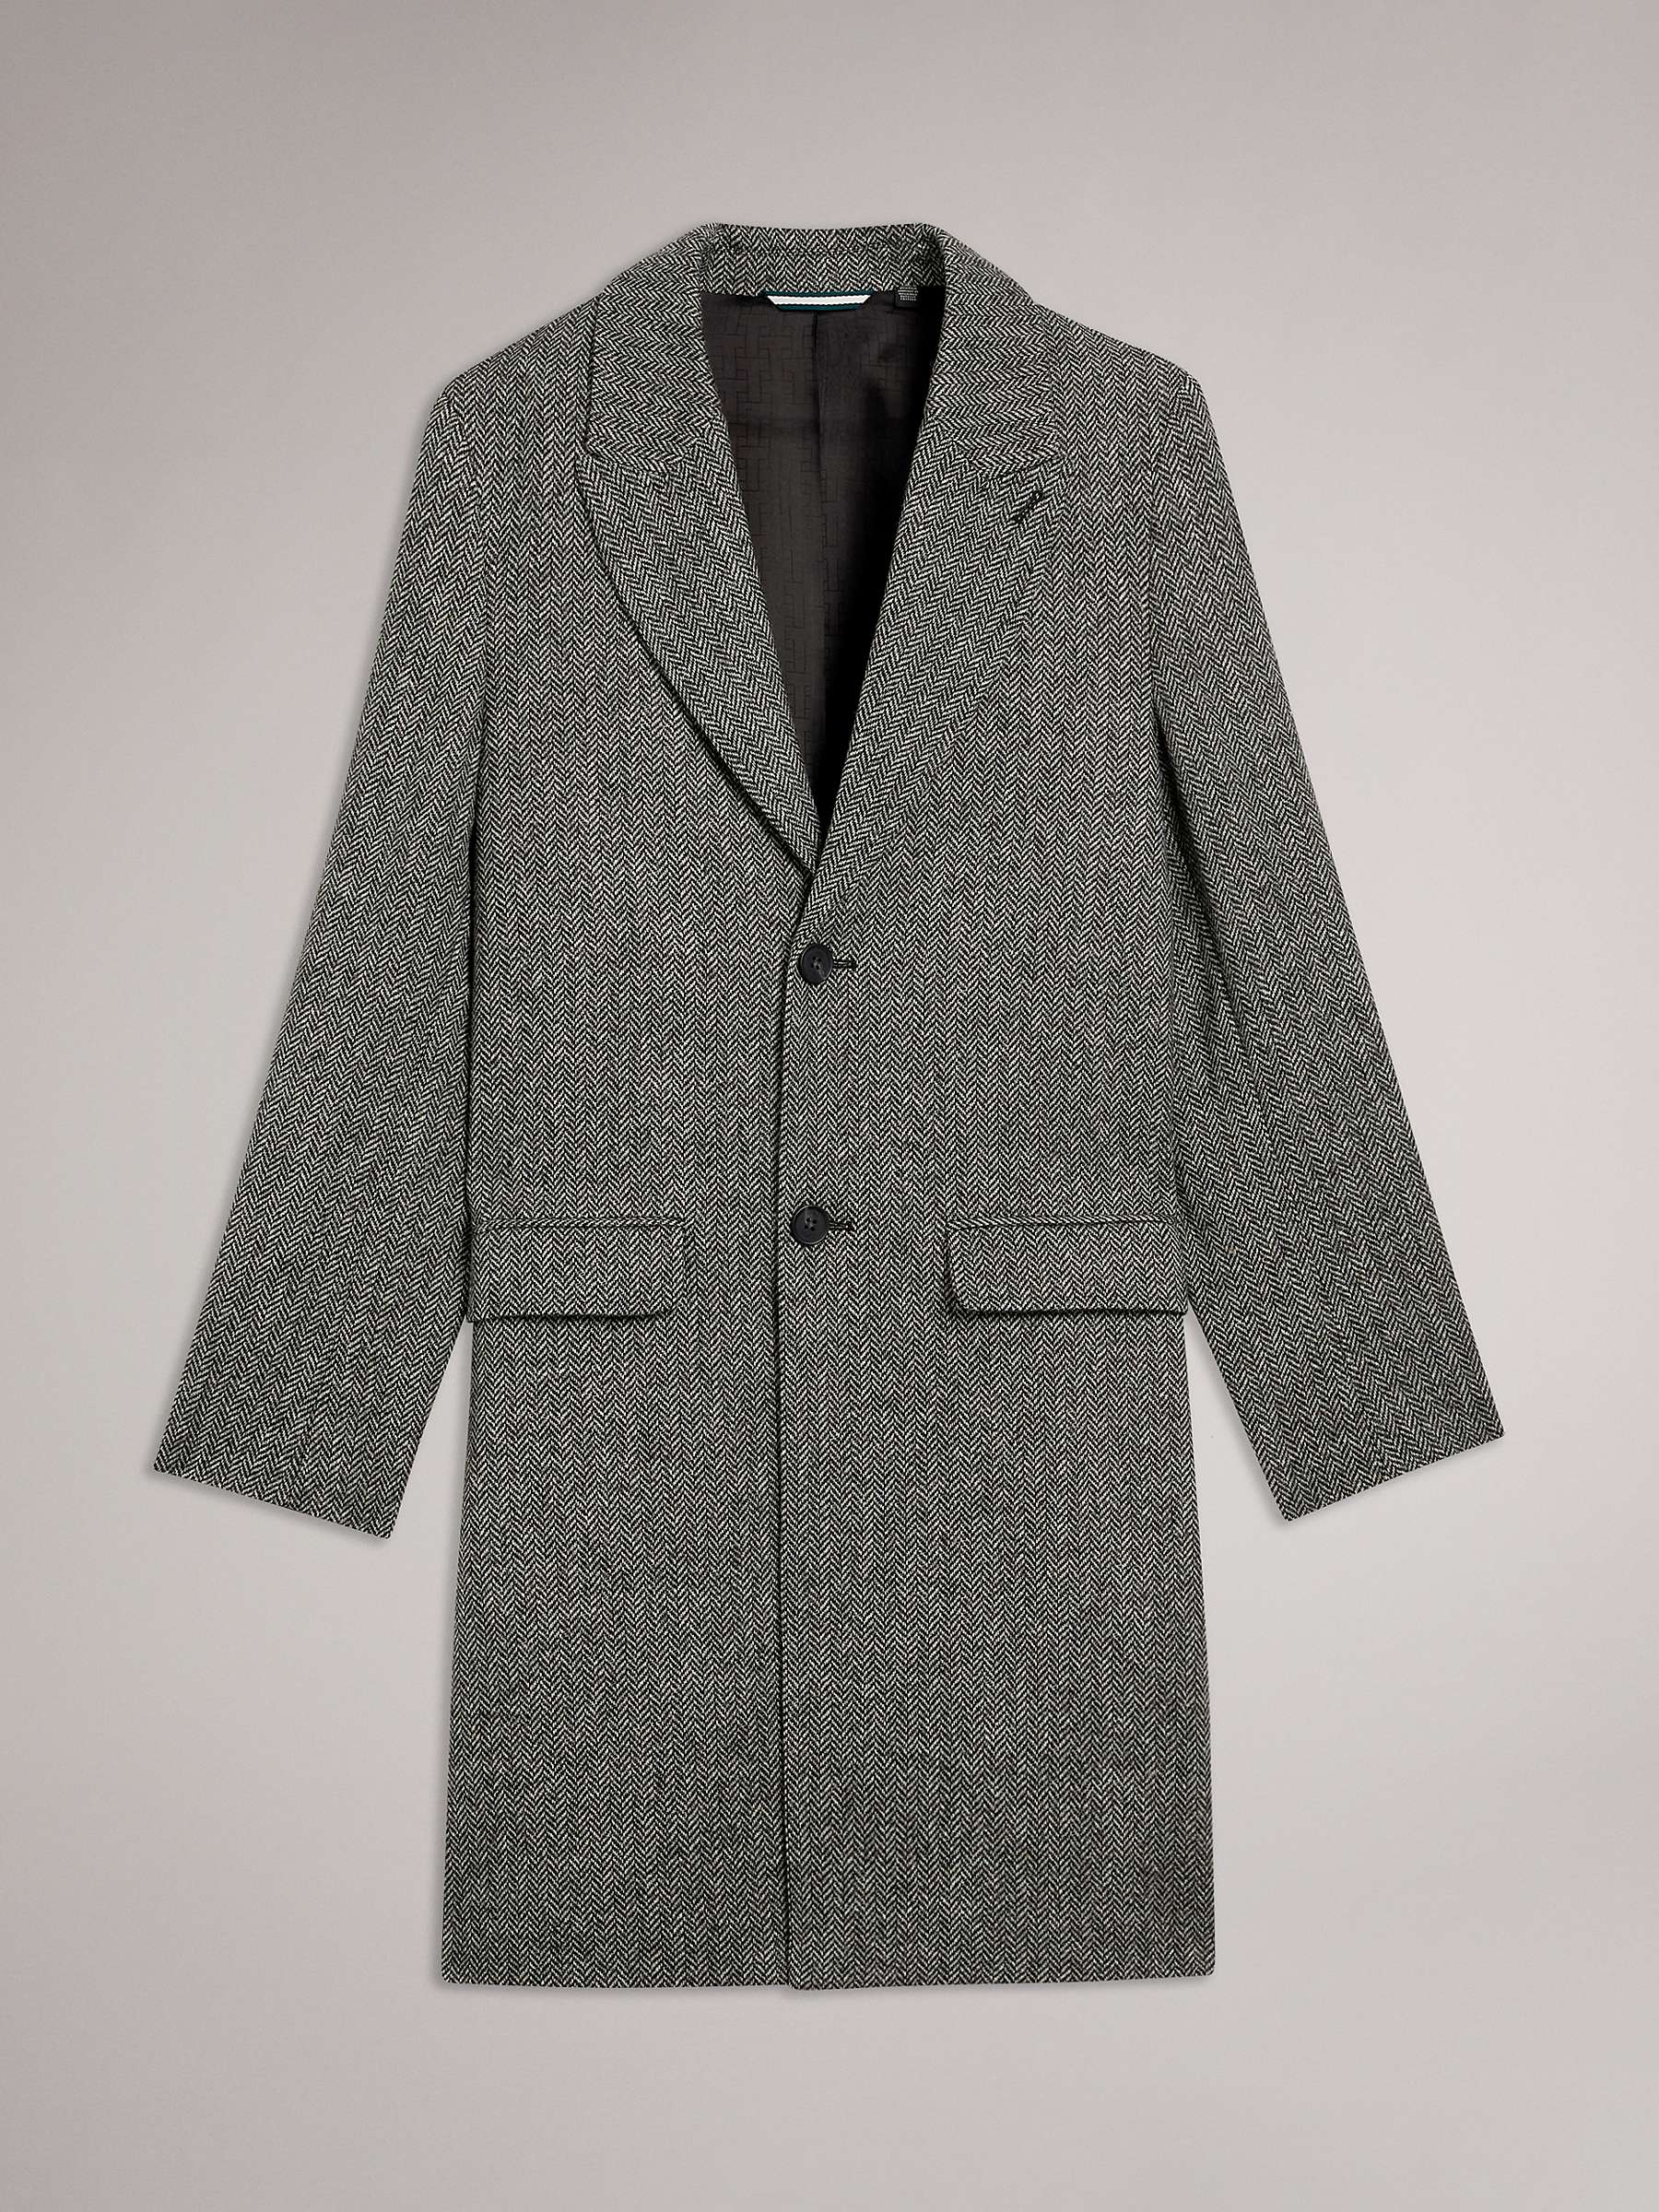 Buy Ted Baker Raywood British Wool Herringbone Overcoat Online at johnlewis.com